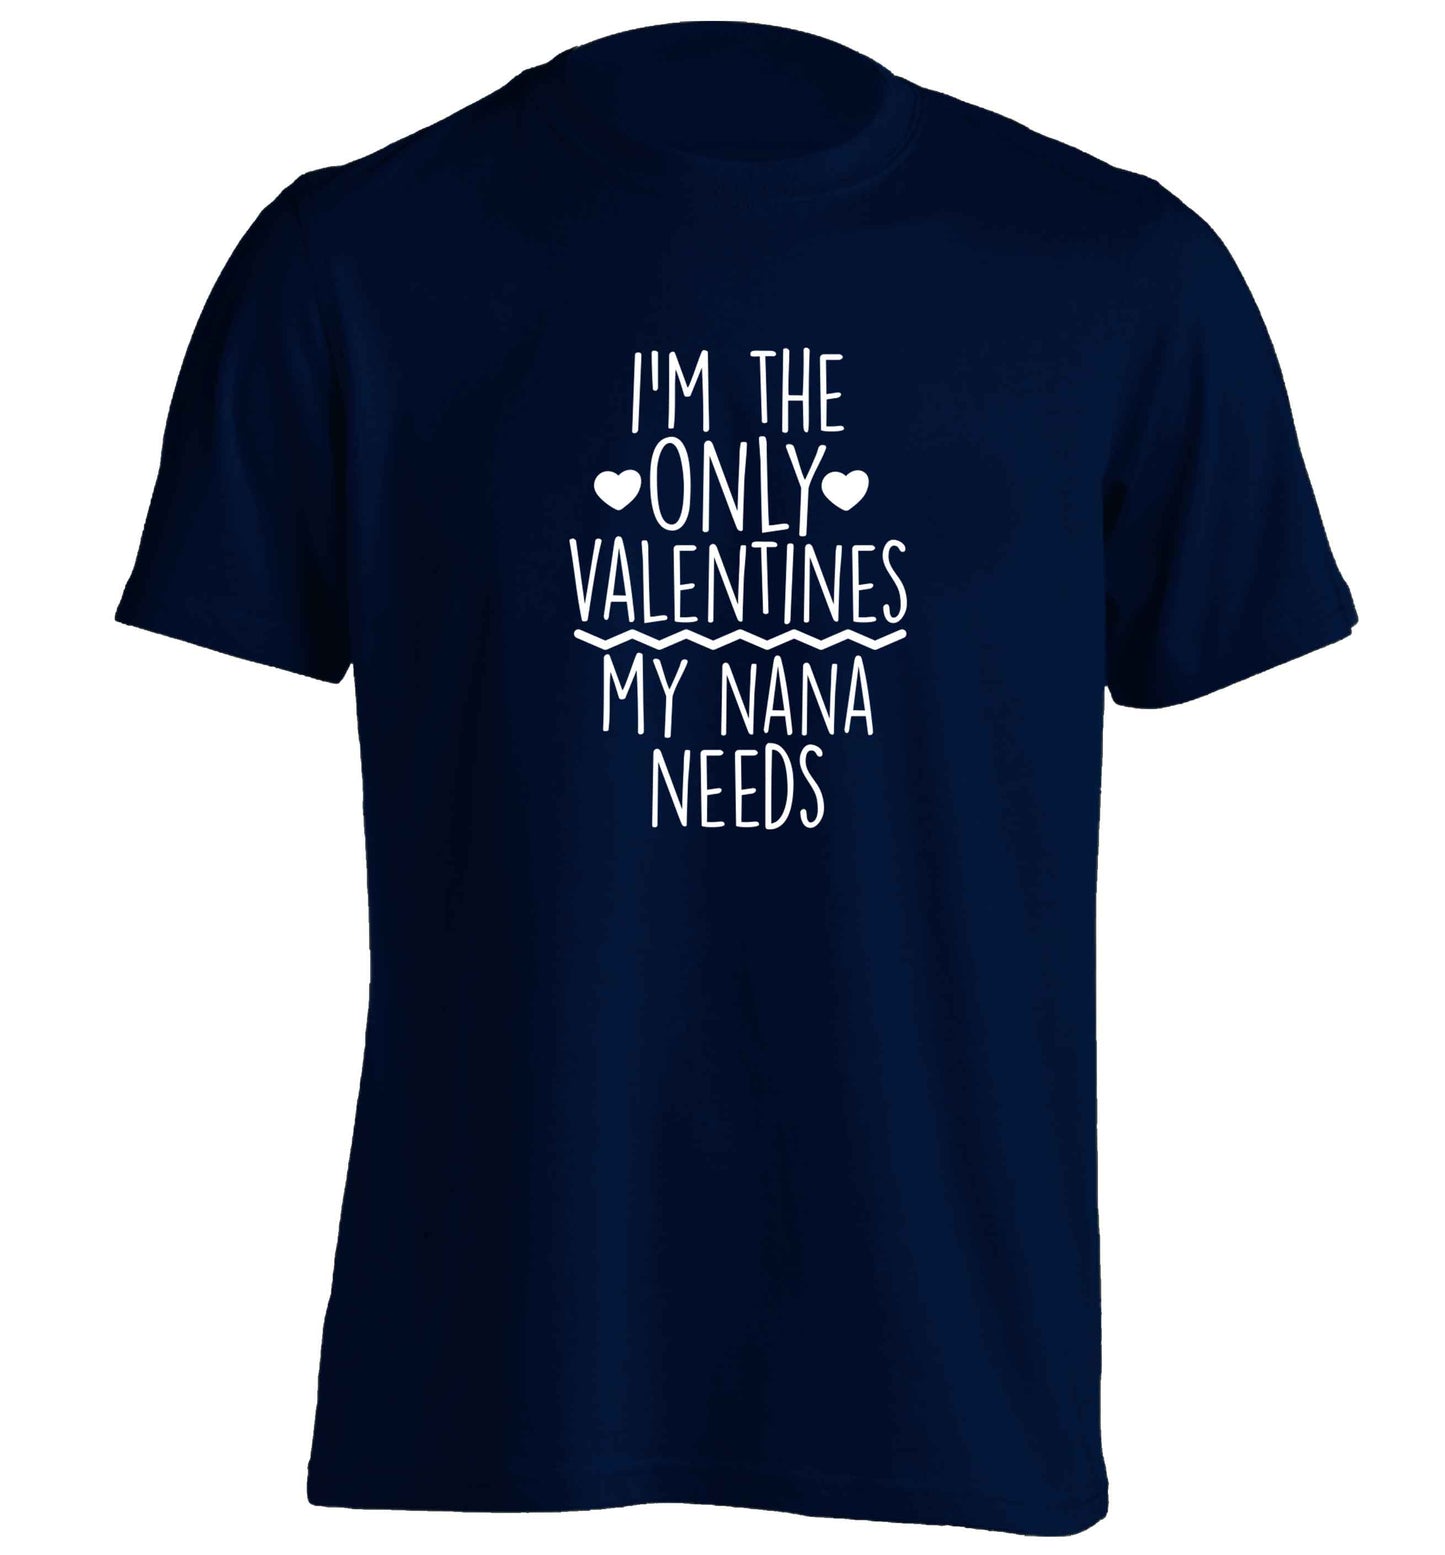 I'm the only valentines my nana needs adults unisex navy Tshirt 2XL